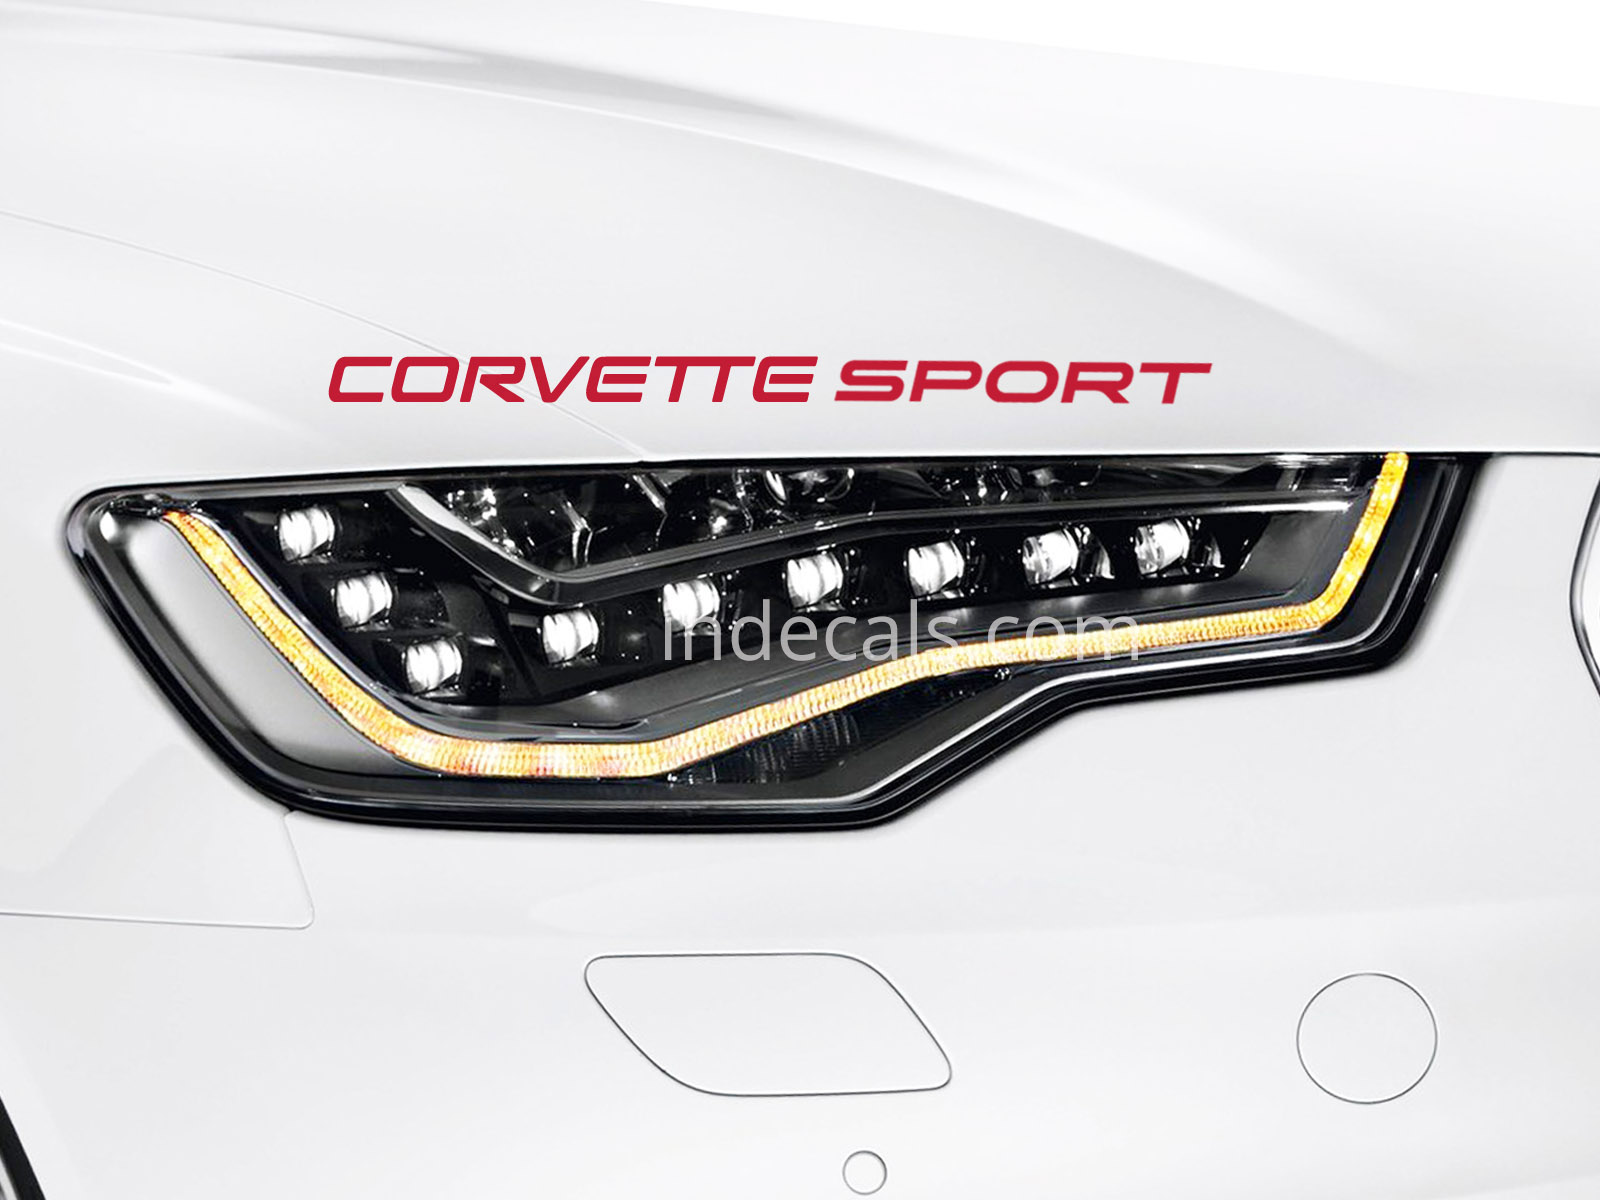 1 x Corvette Sport Sticker - Red